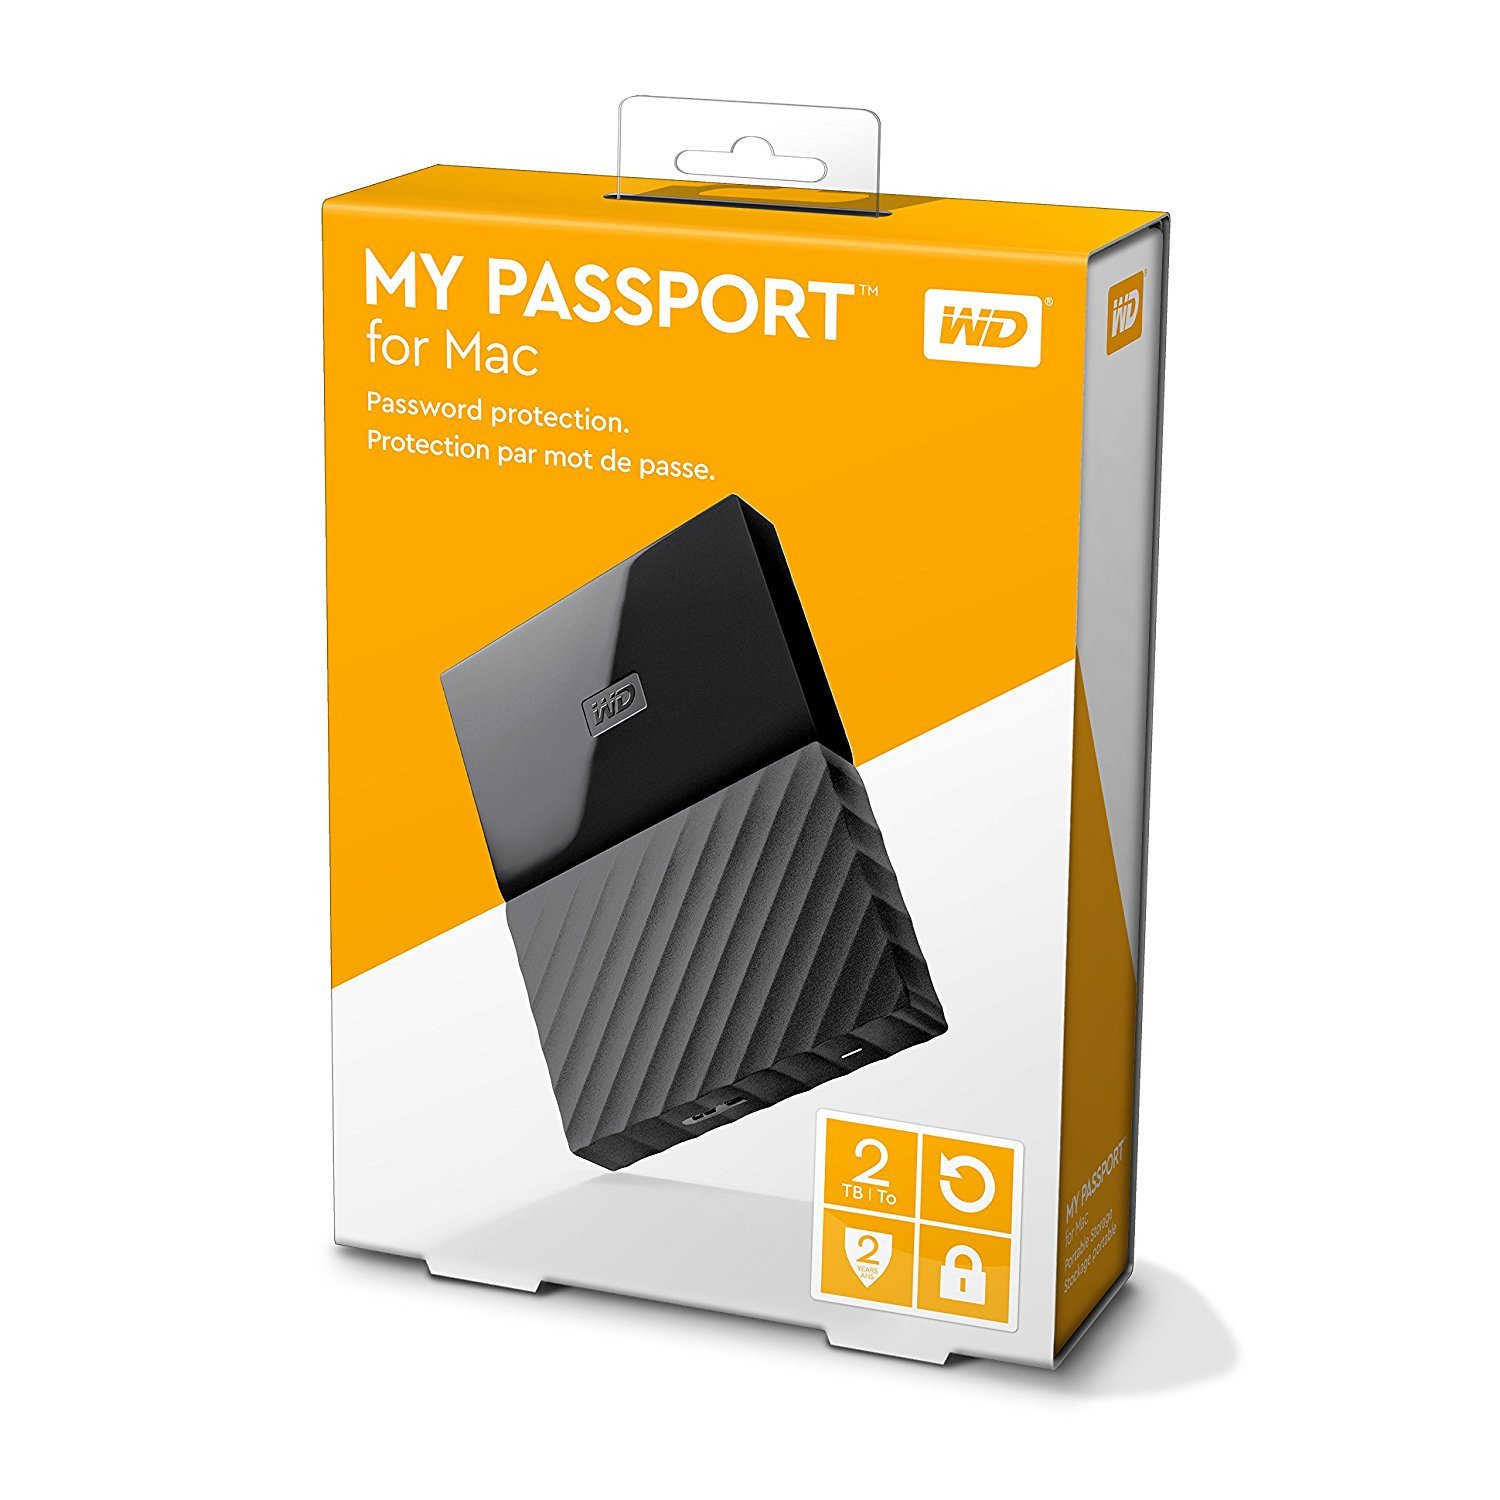 wd 2 tb my passport portable usb 3.0 hard drive black